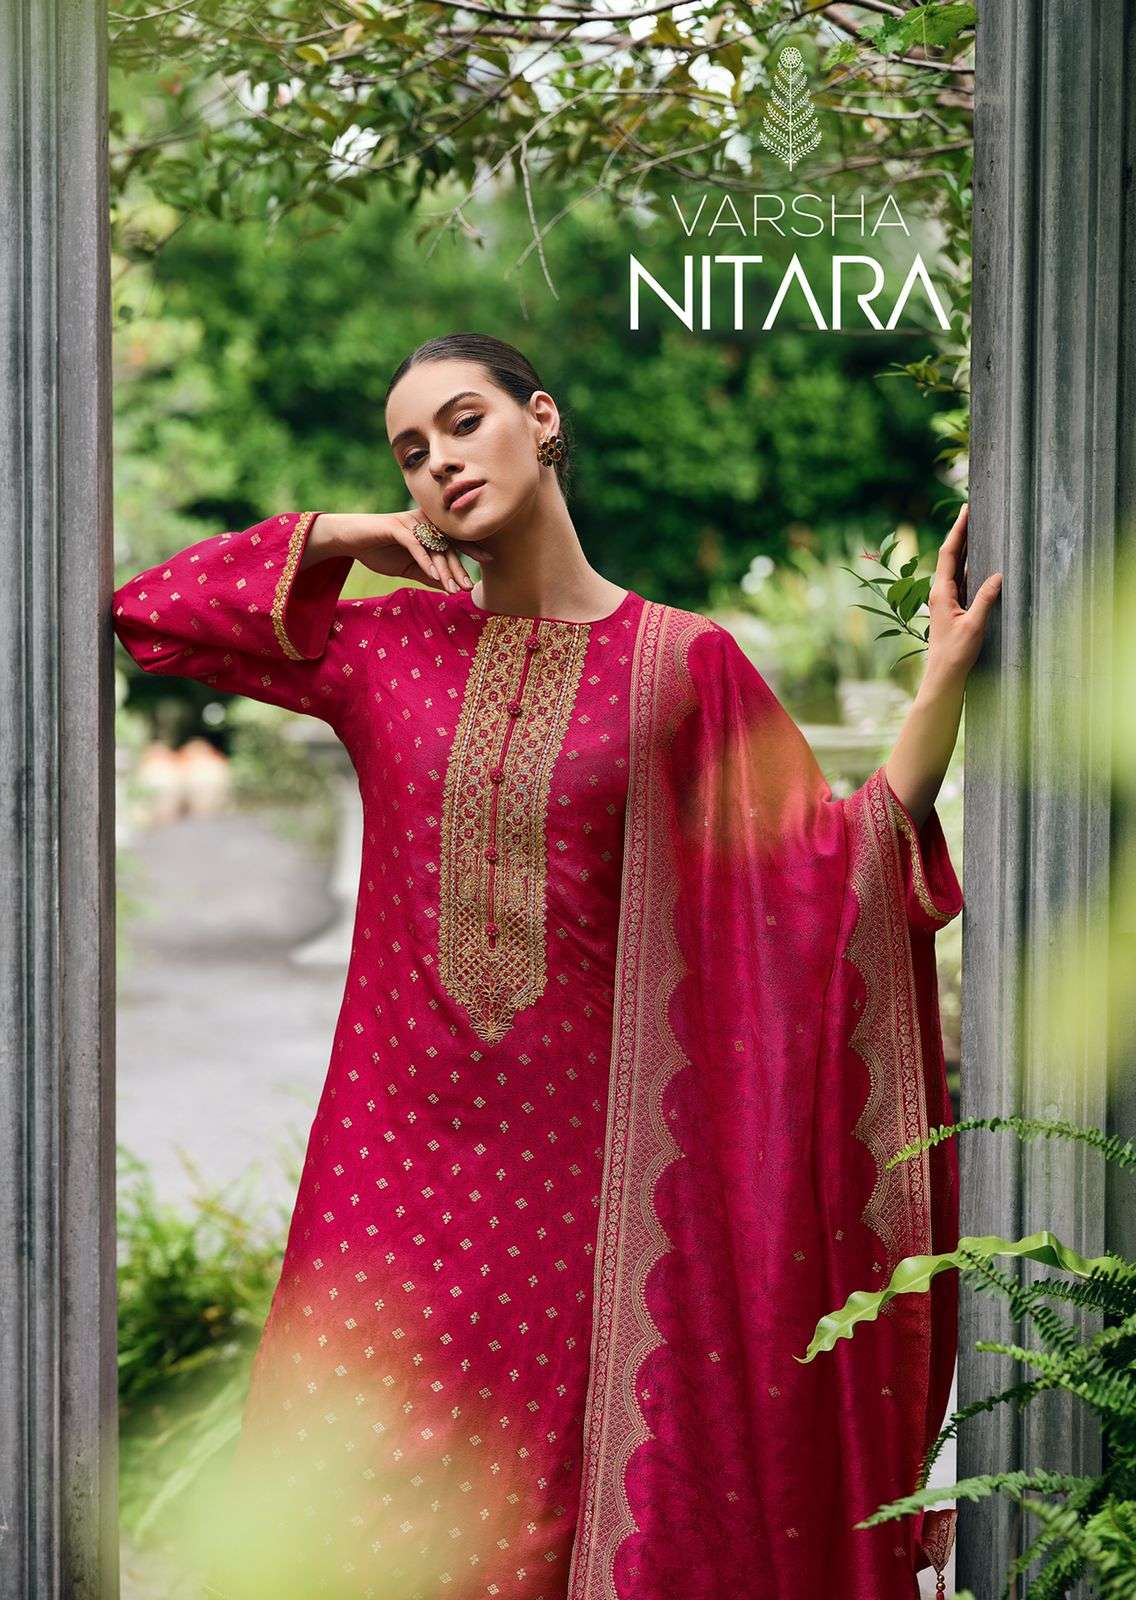 varsha fashion nitara 01-06 series indian designer salwar kameez catalogue latest collection 2023 